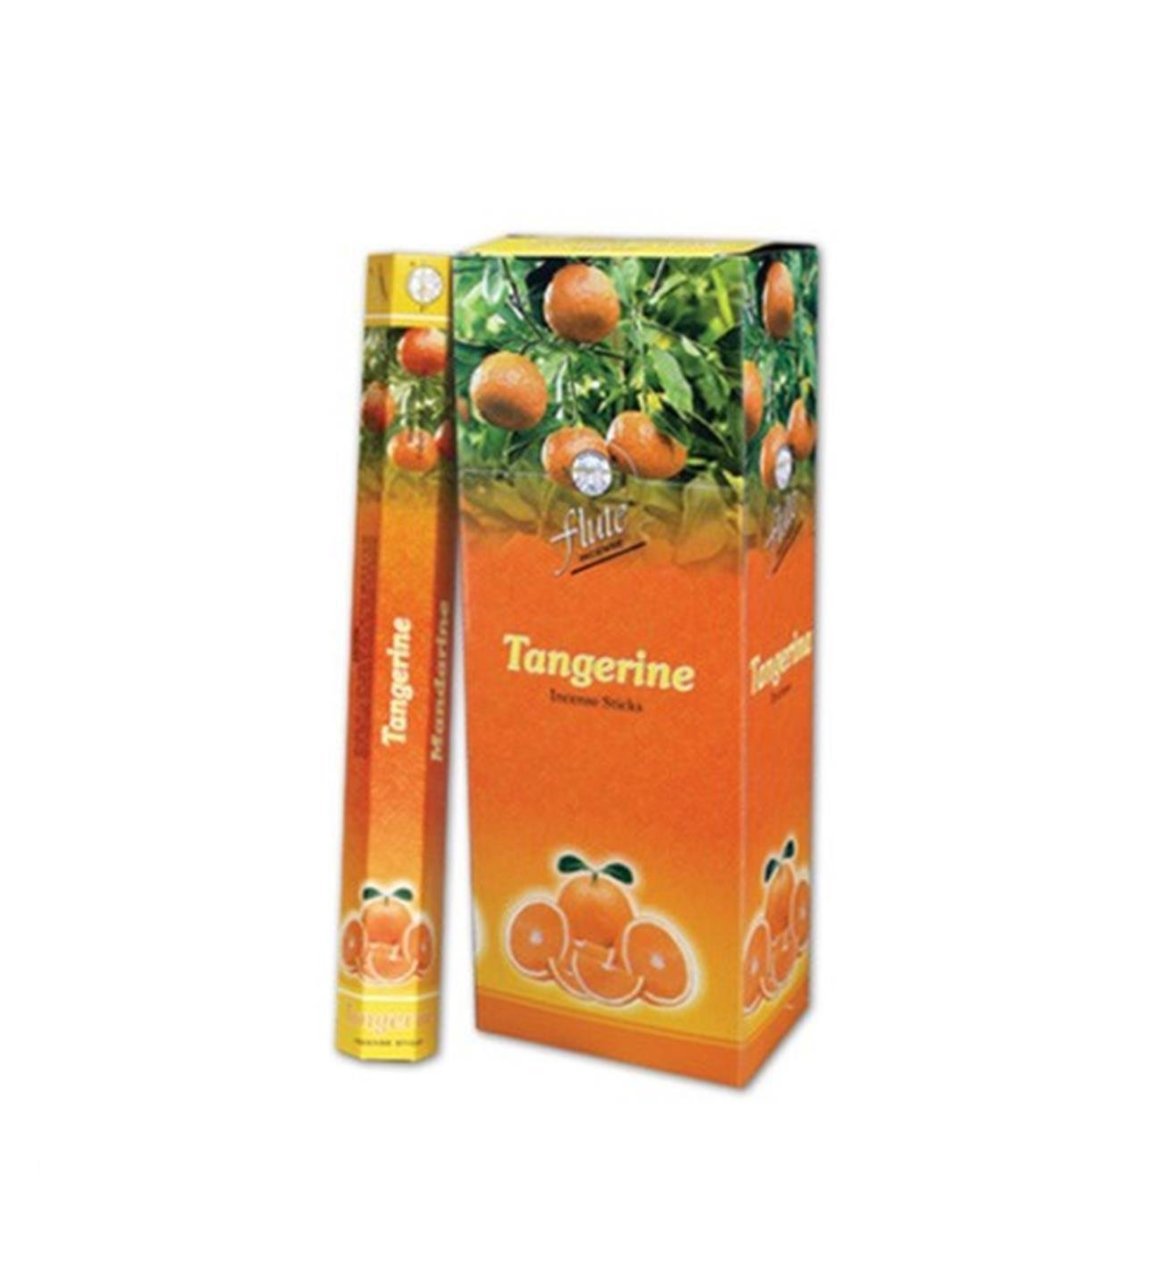 Flute Tangerine Mandalina Çubuk Tütsü Incense Sticks (120 Adet)